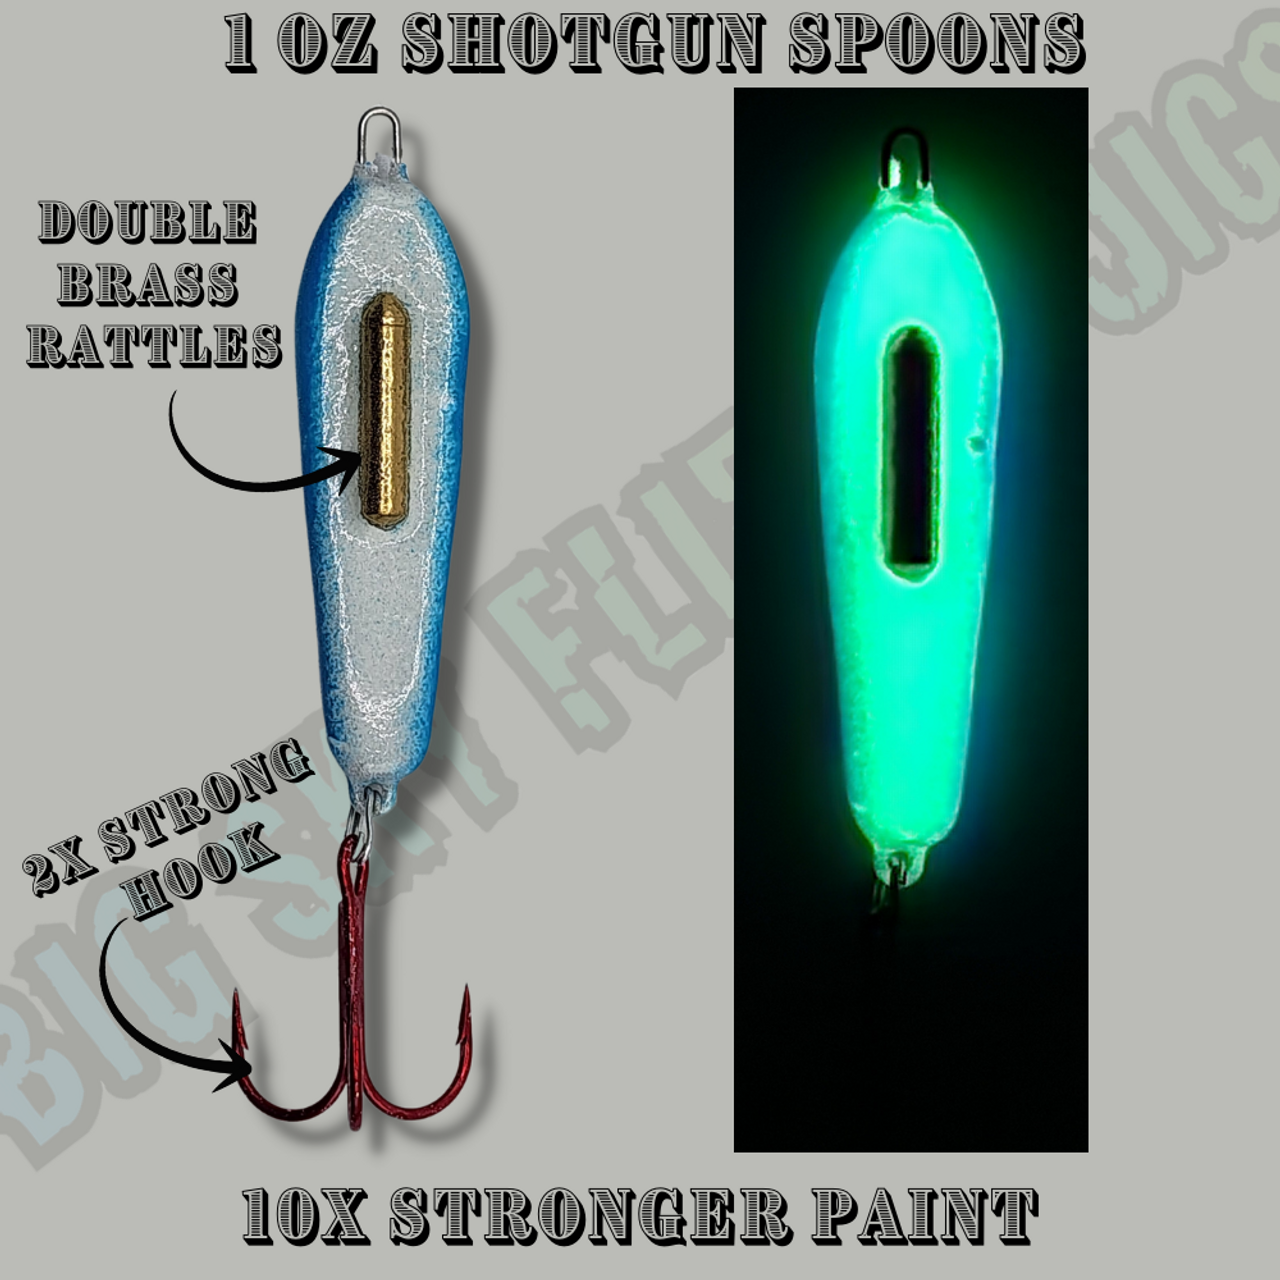 1 oz Double Barrel Rattle Shotgun Spoon Blue